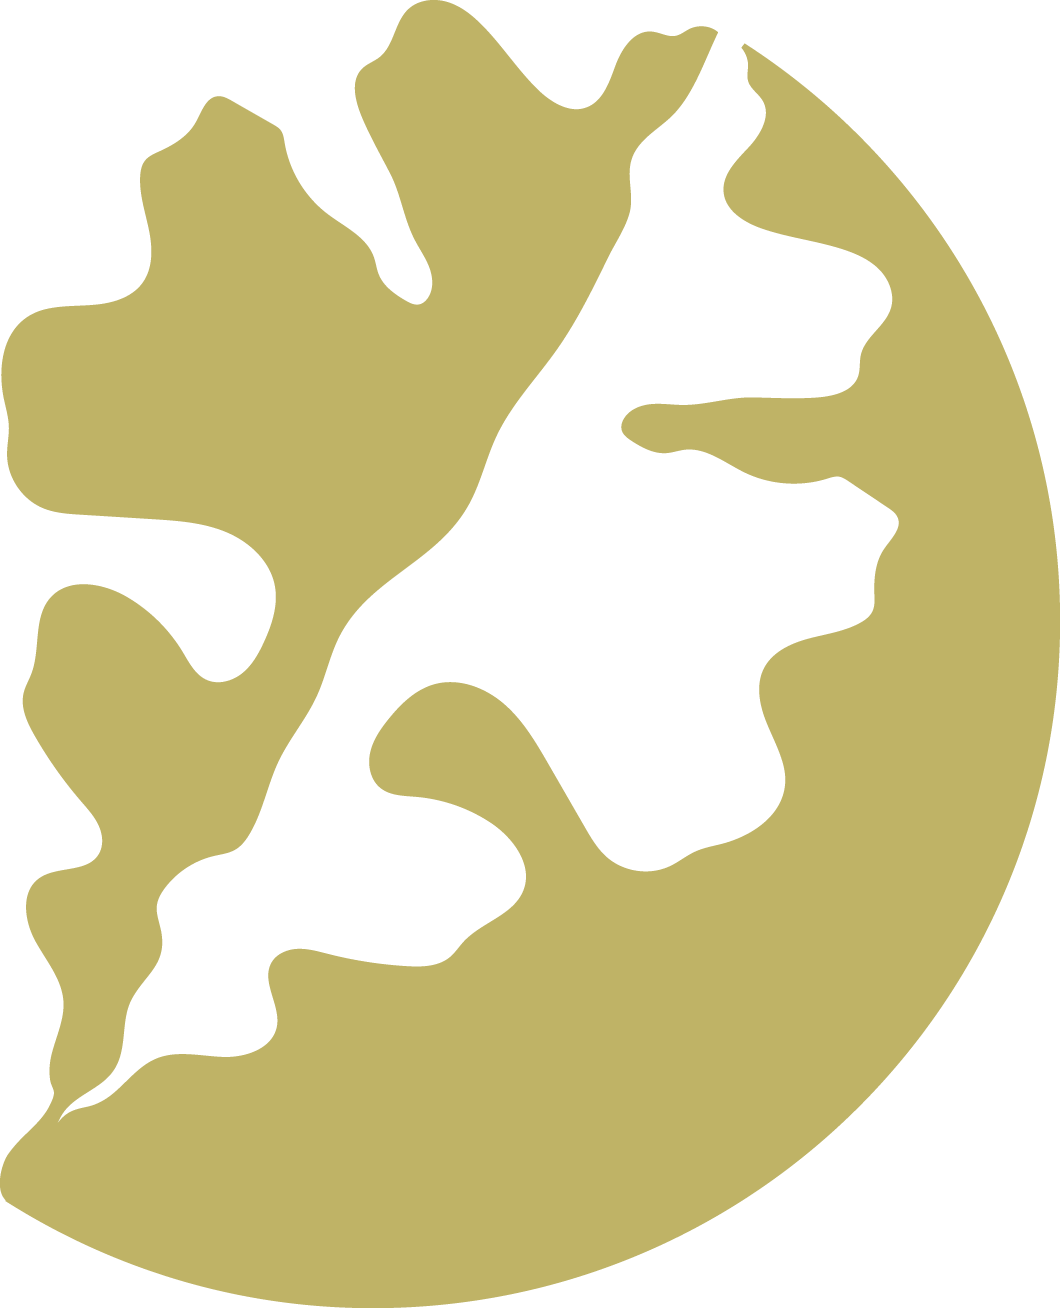 East Oak leaf logo yellow